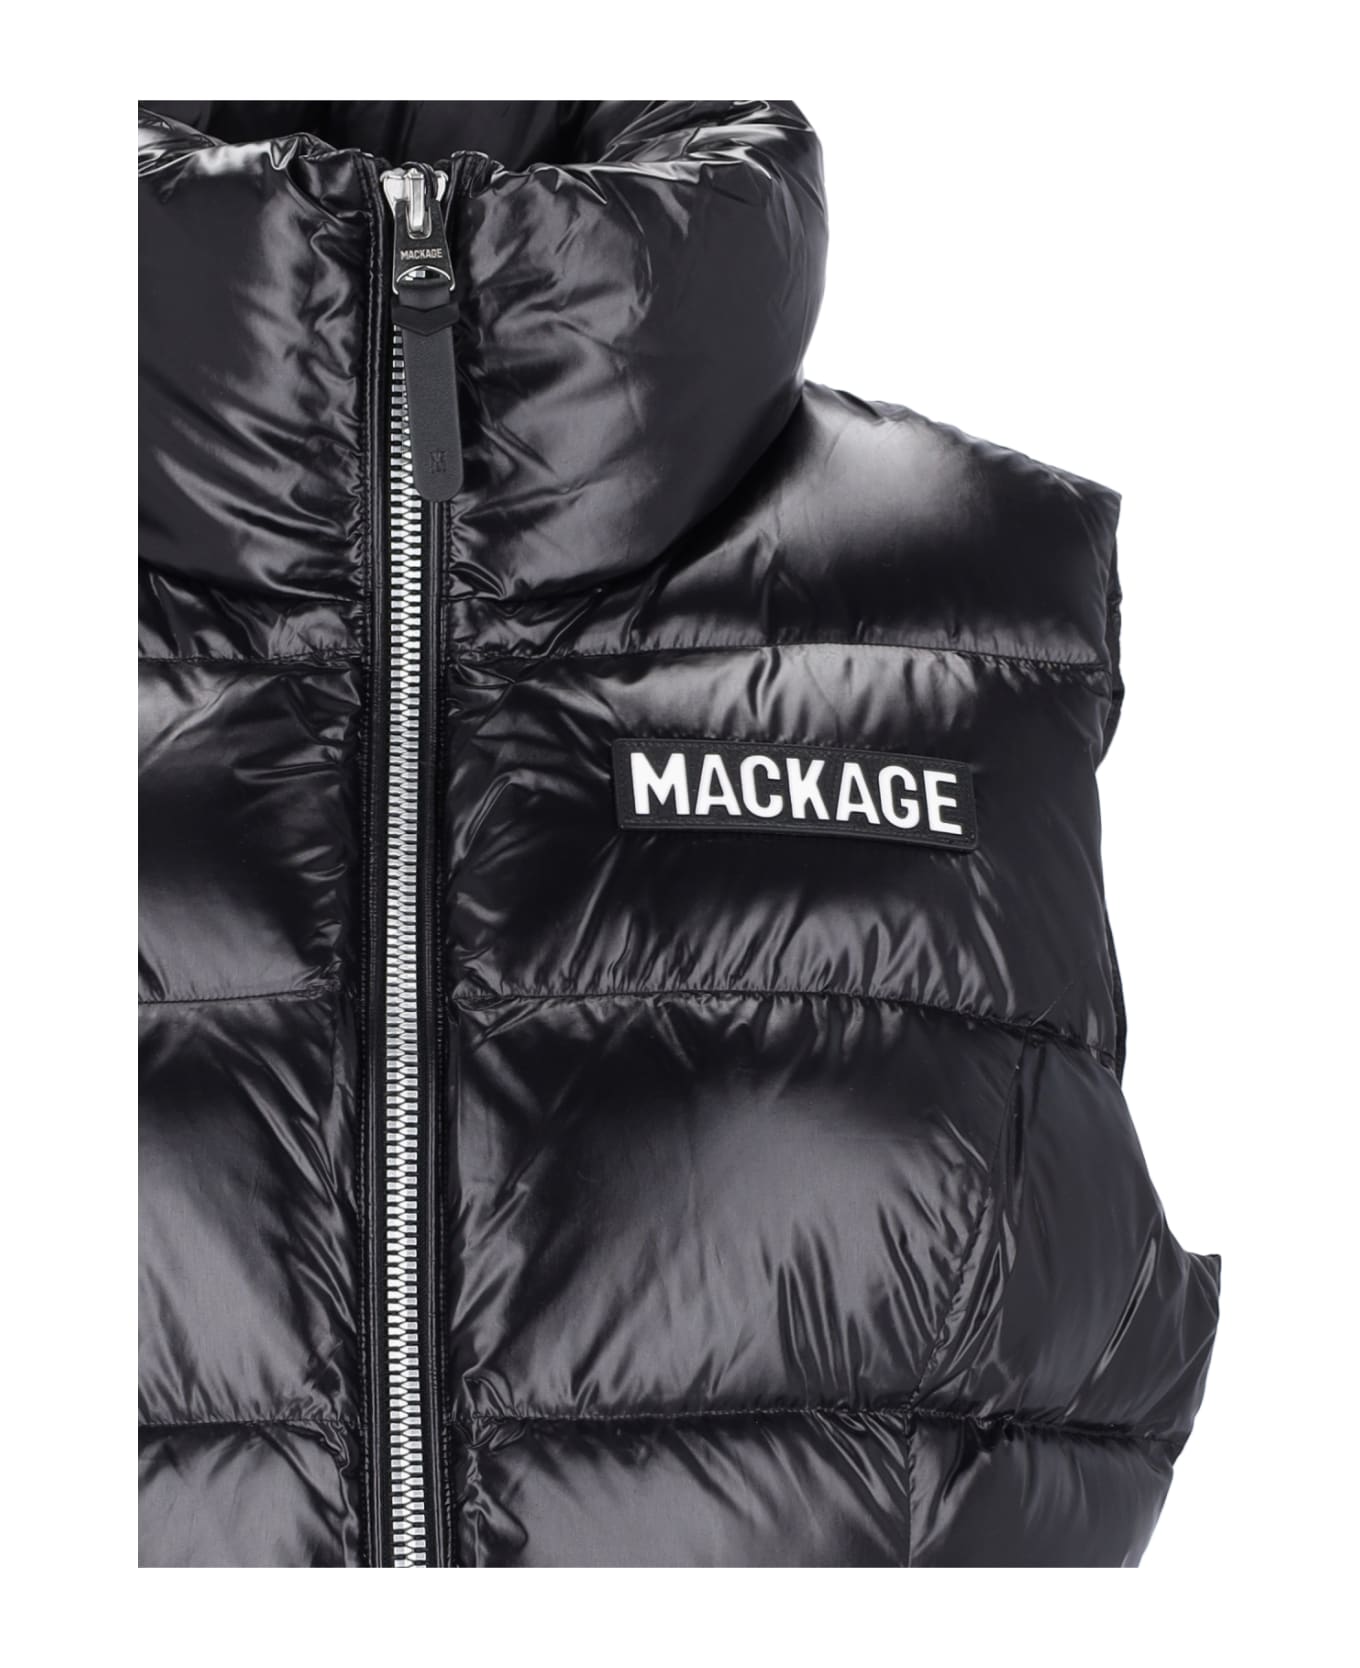 Mackage Jacket - Black